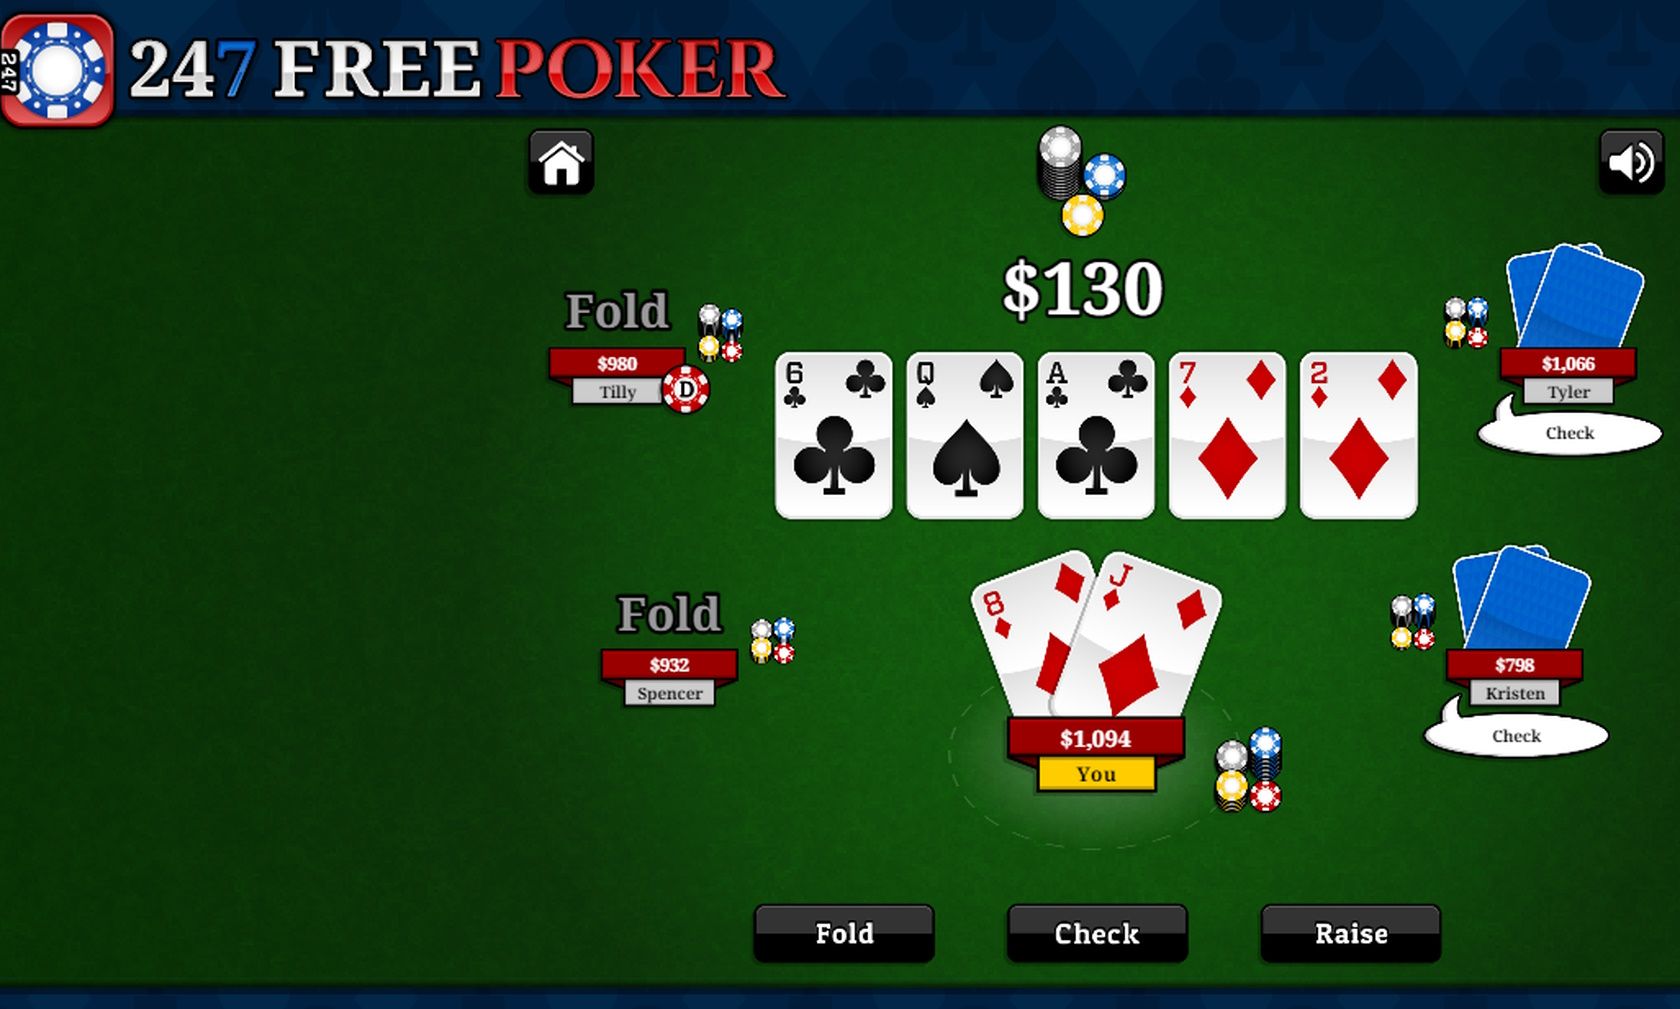 247 poker free card game website